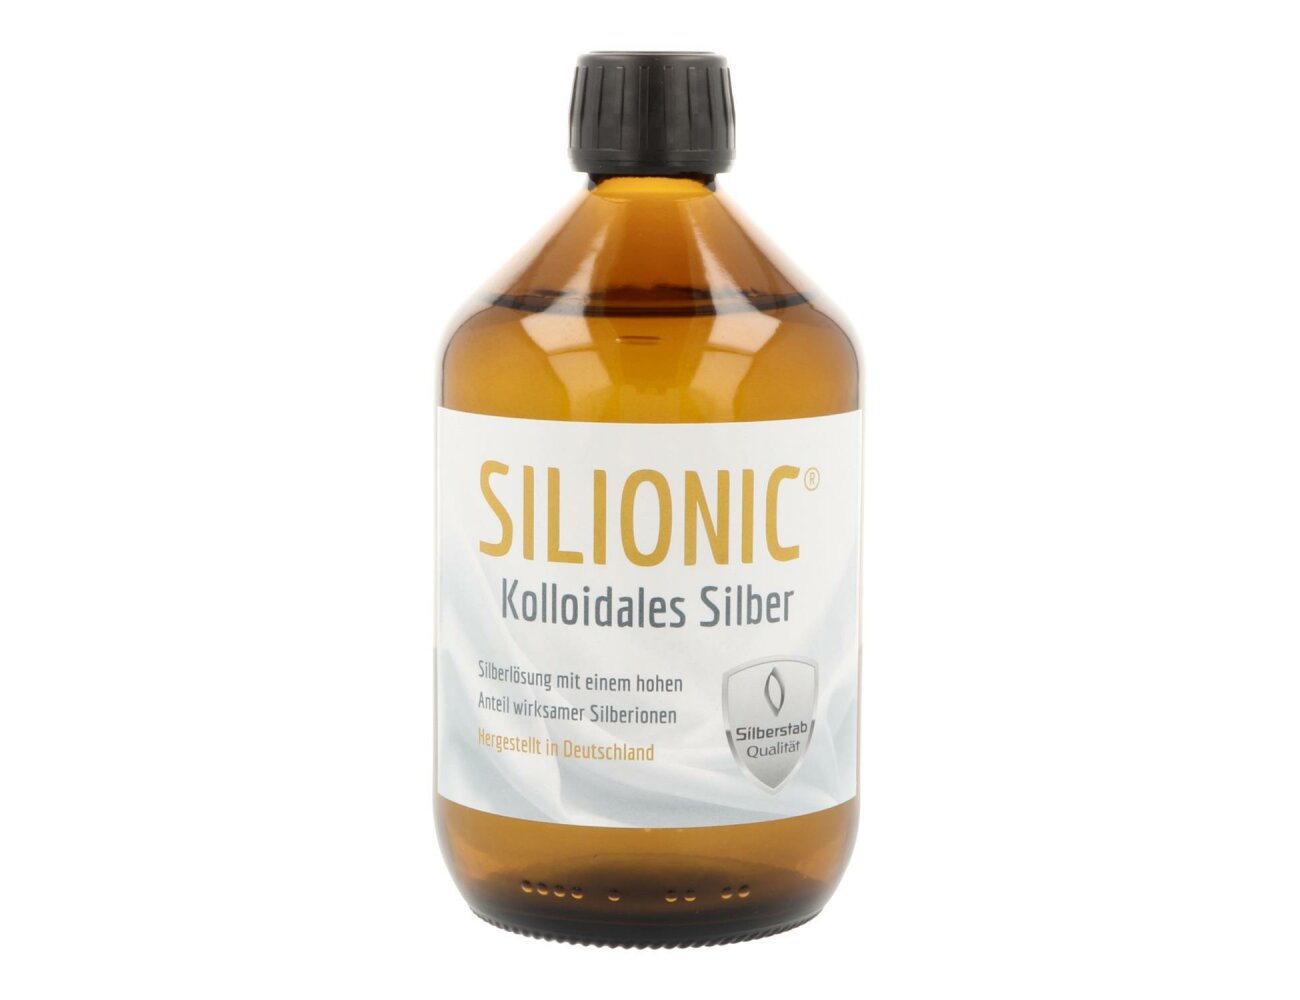 Silionic Kolloidales Silber, 10 ppm, 500 ml